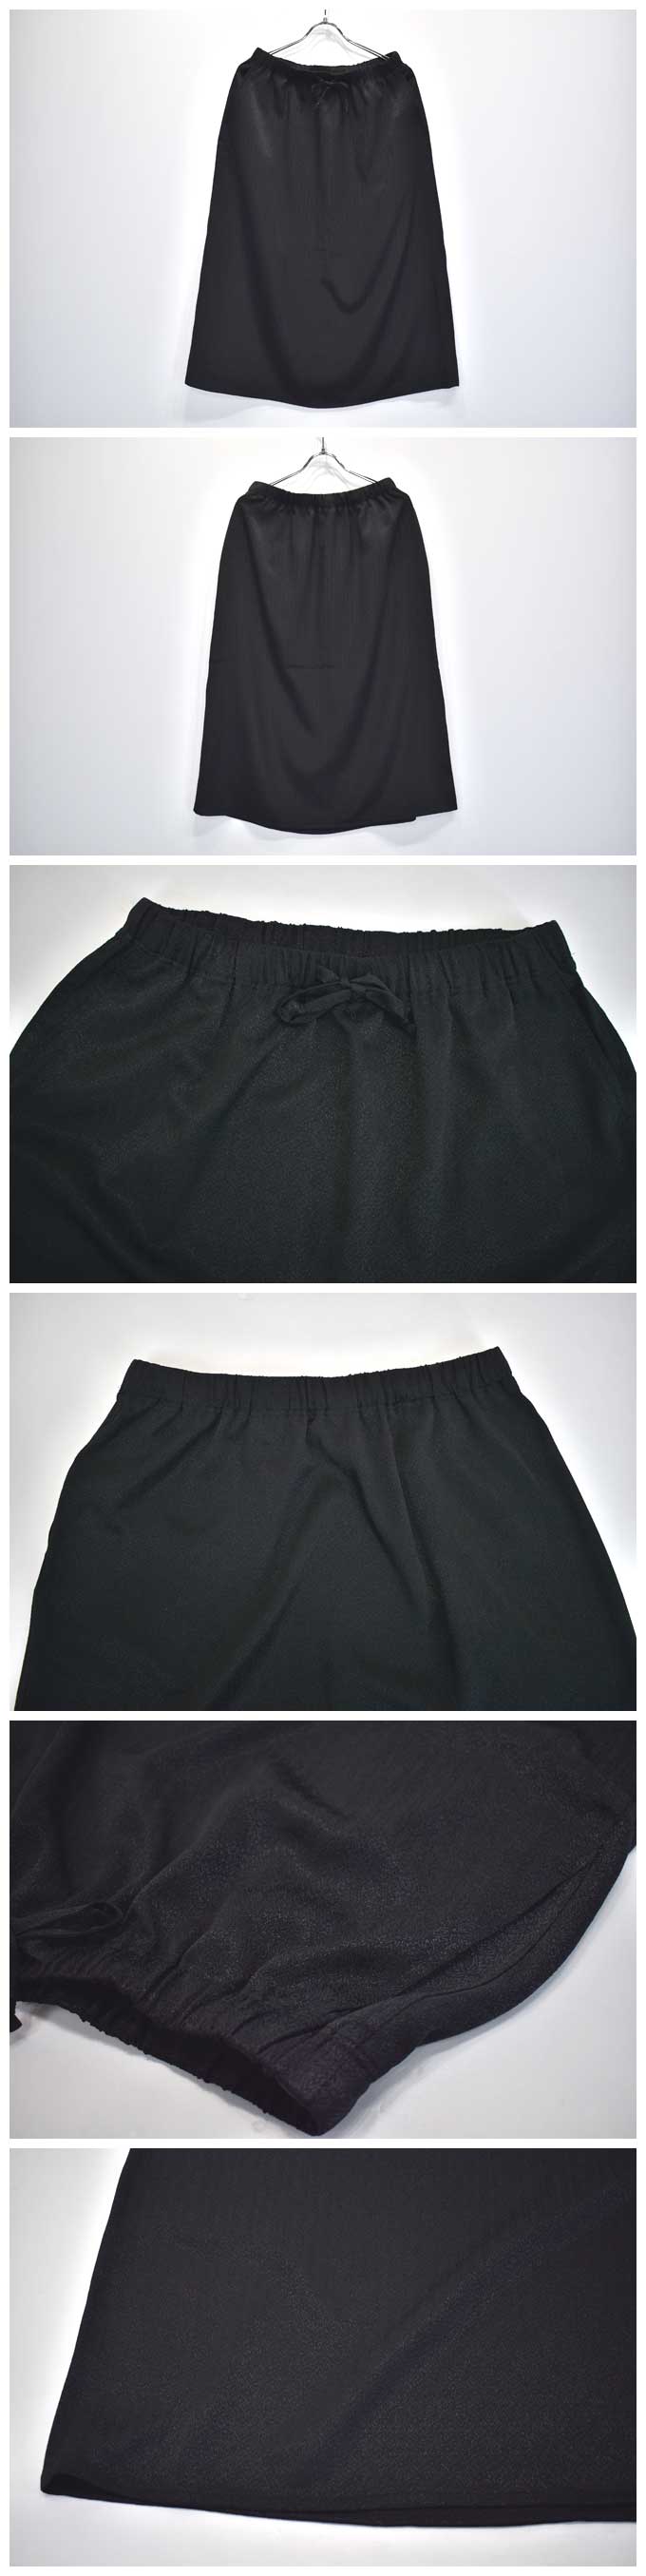 South2 West8 String Slack Skirt (Poly Jacquard Fine Pattern)